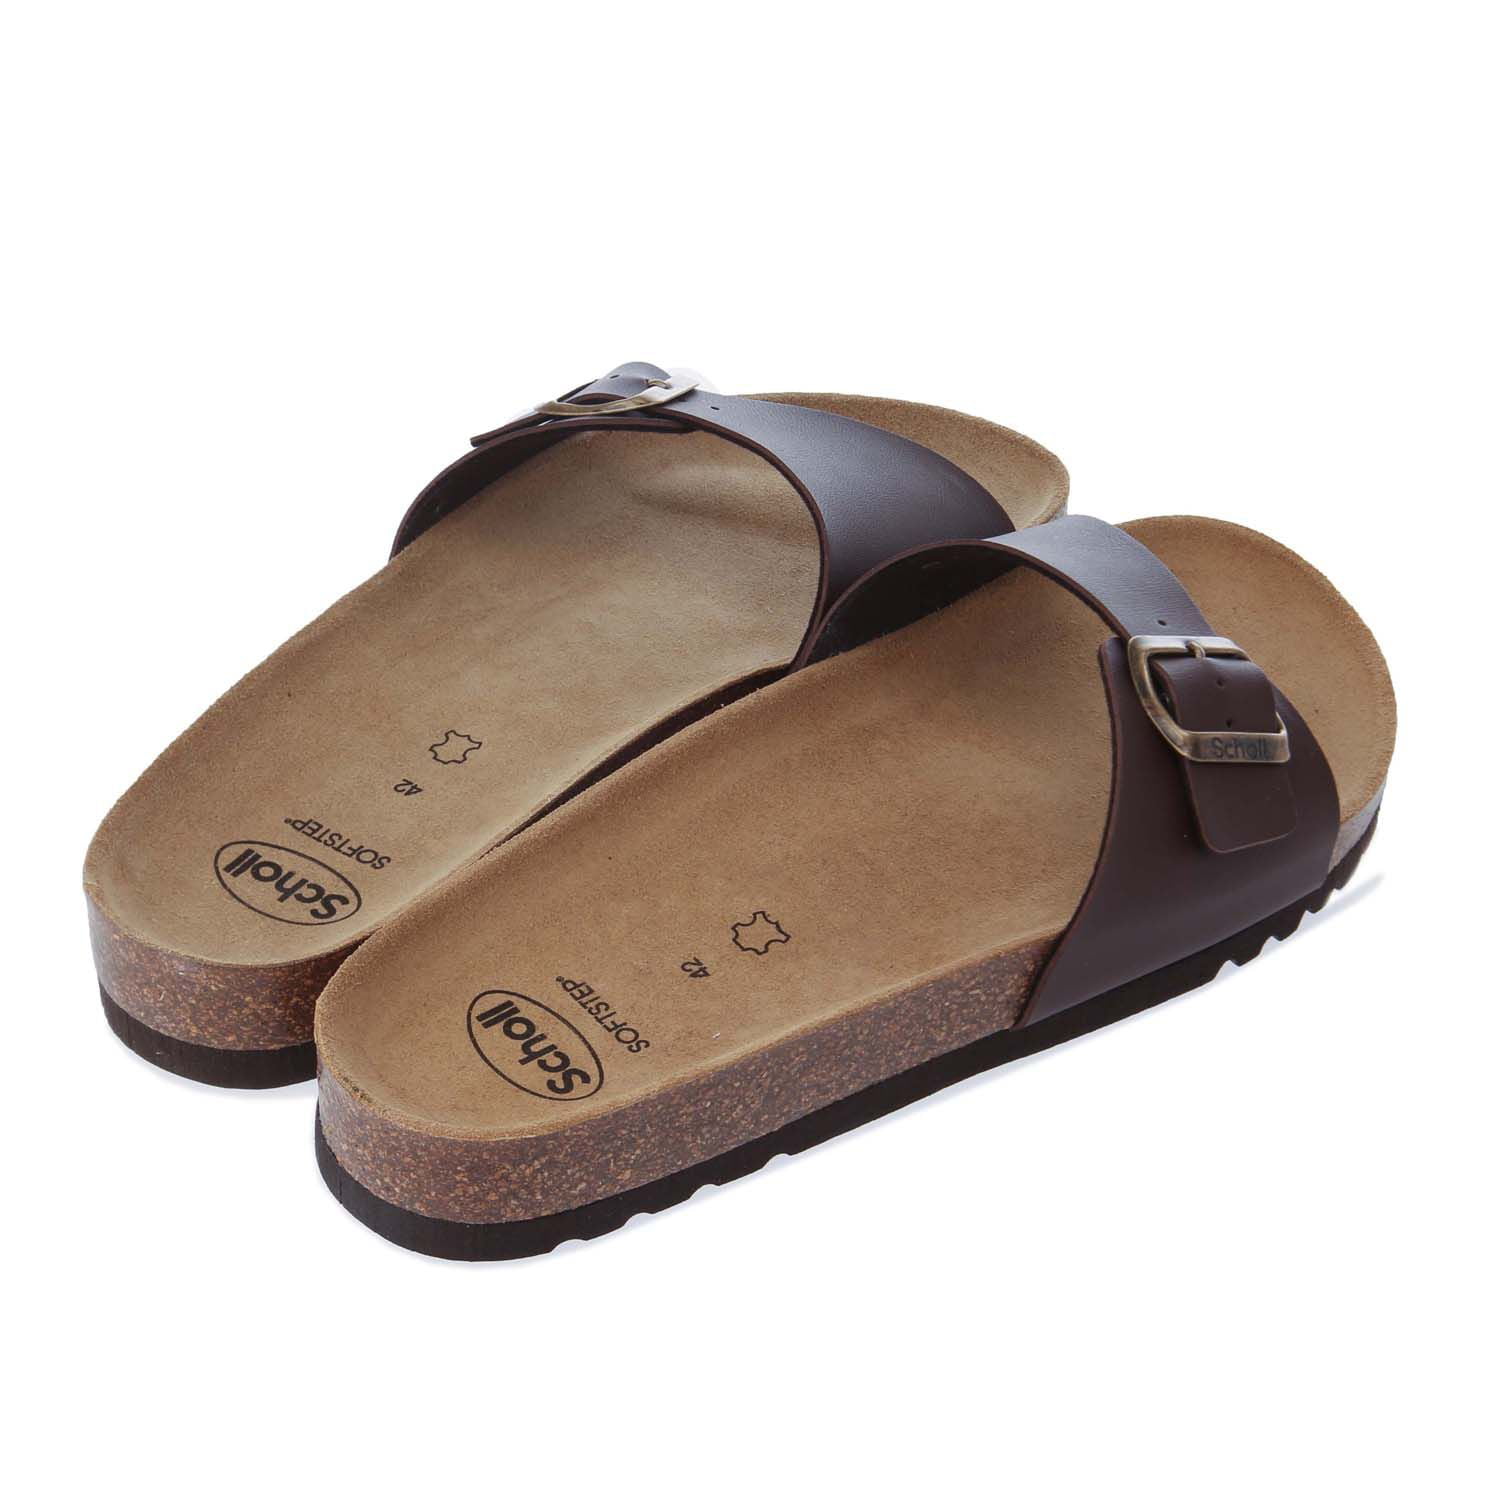 Men's Scholl Bio Champion Sandals in Brown - Walmart.com